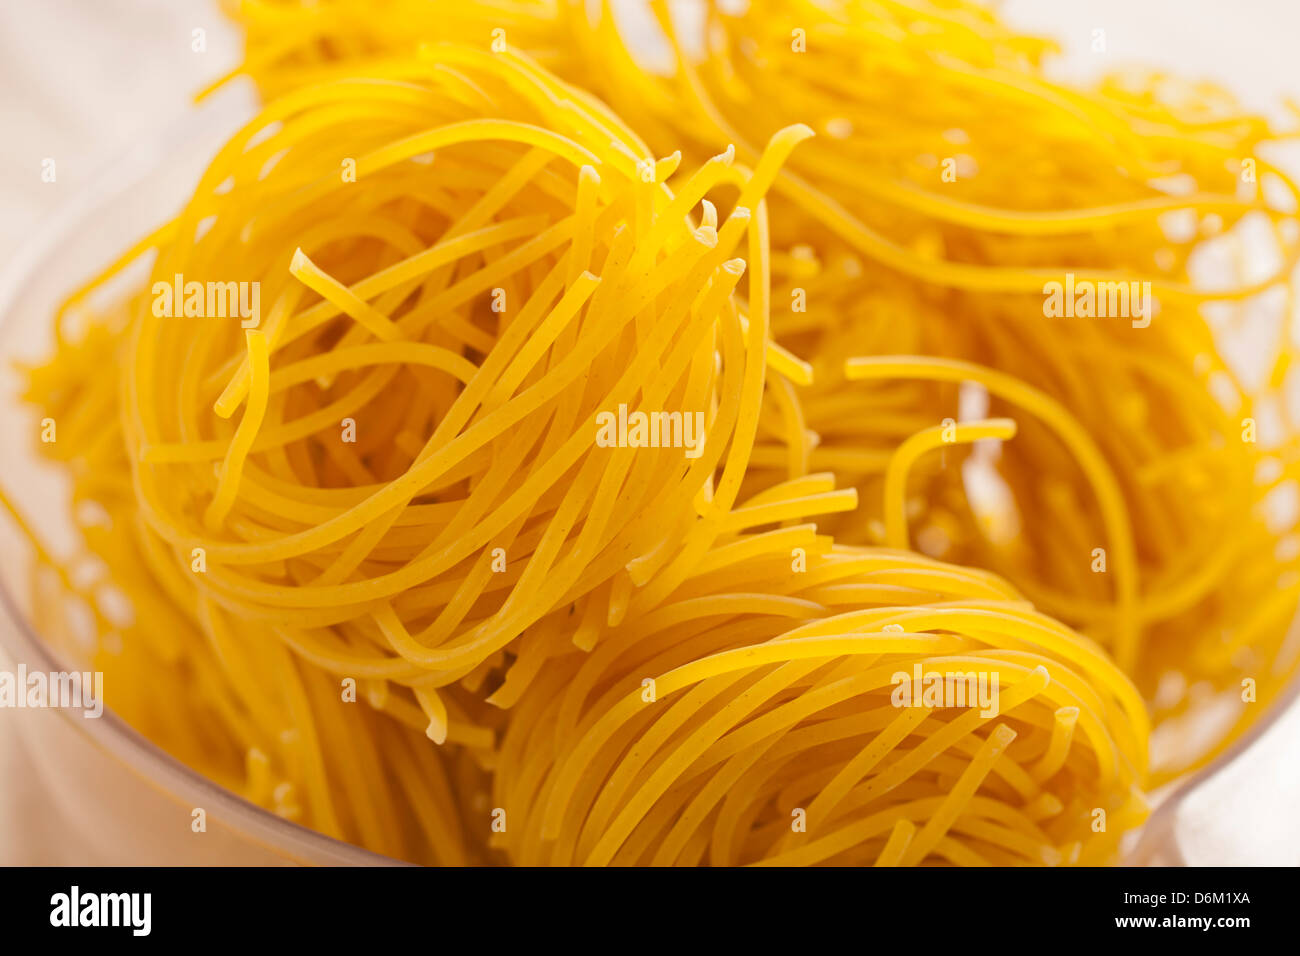 fideos – fine Spanish noodles Stock Photo